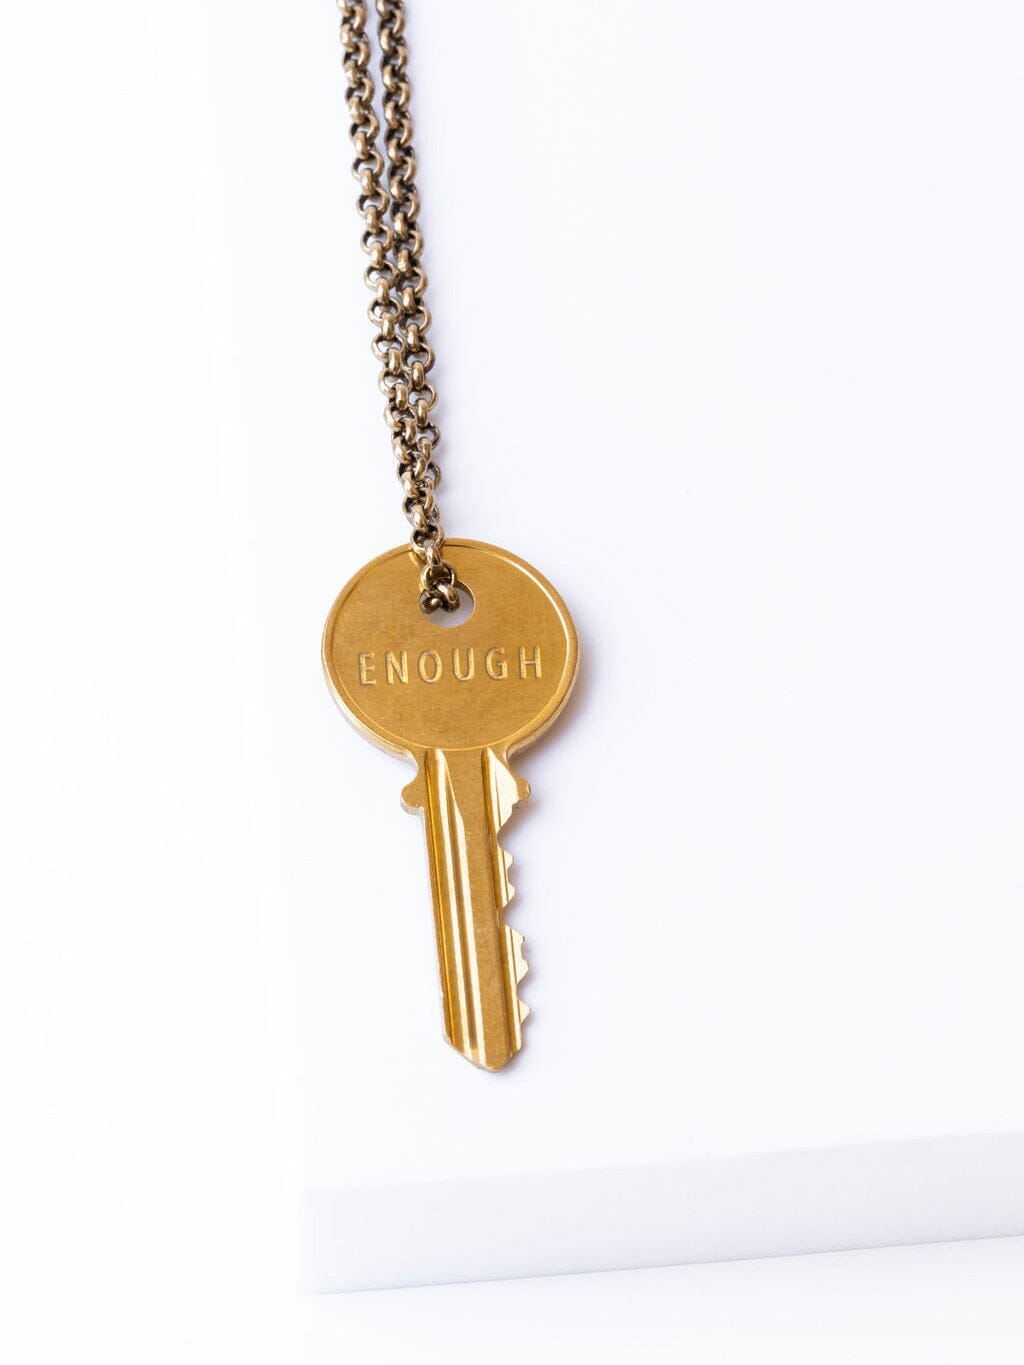  Key To My Heart Necklace, Skeleton Key Necklace, Key Pendant :  Handmade Products